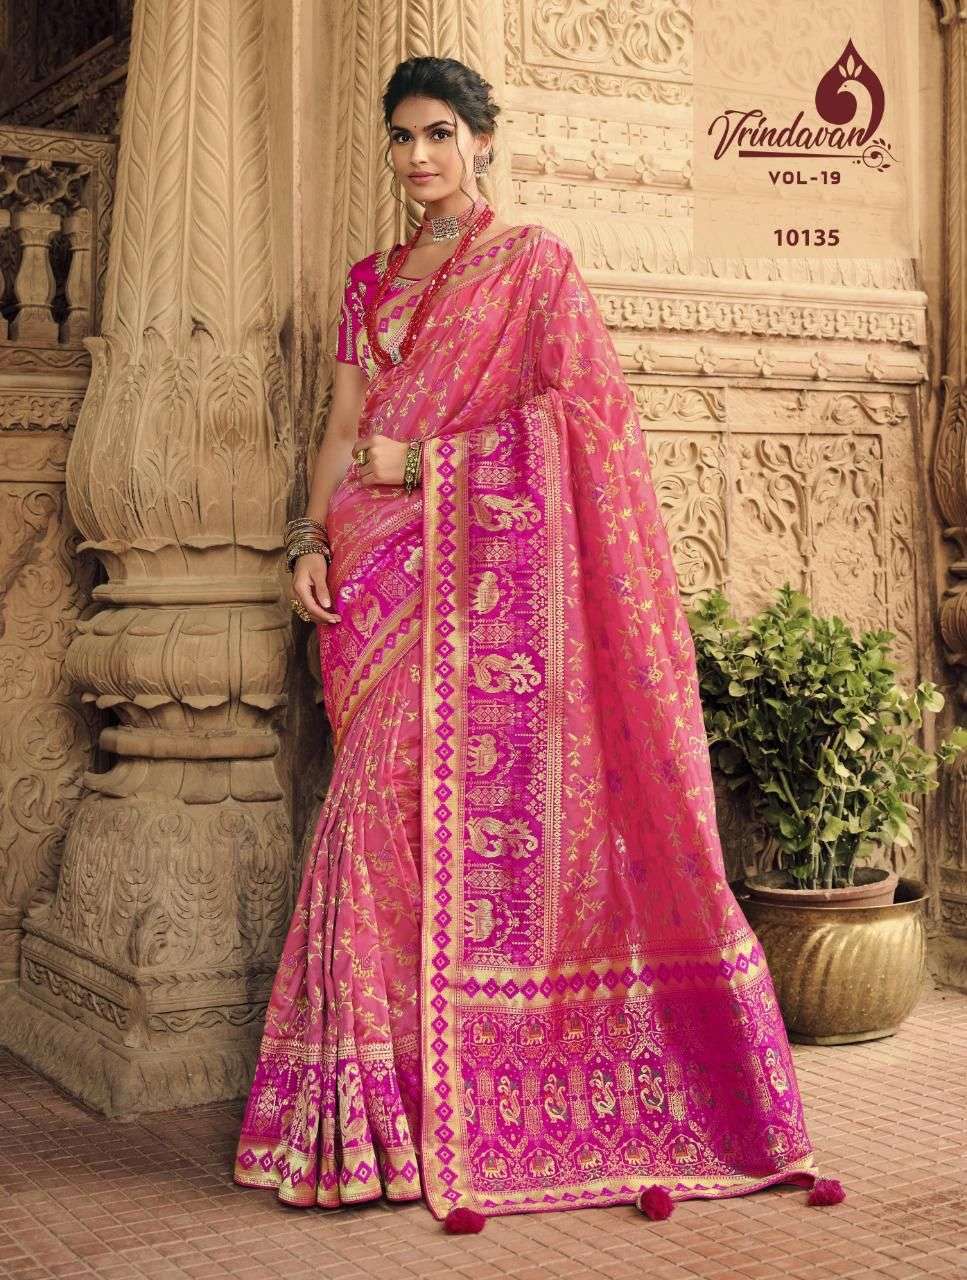 Royal presents vrindavan vol-19 10127 to 10141 series exclusive designer party wear saree catalog collection 